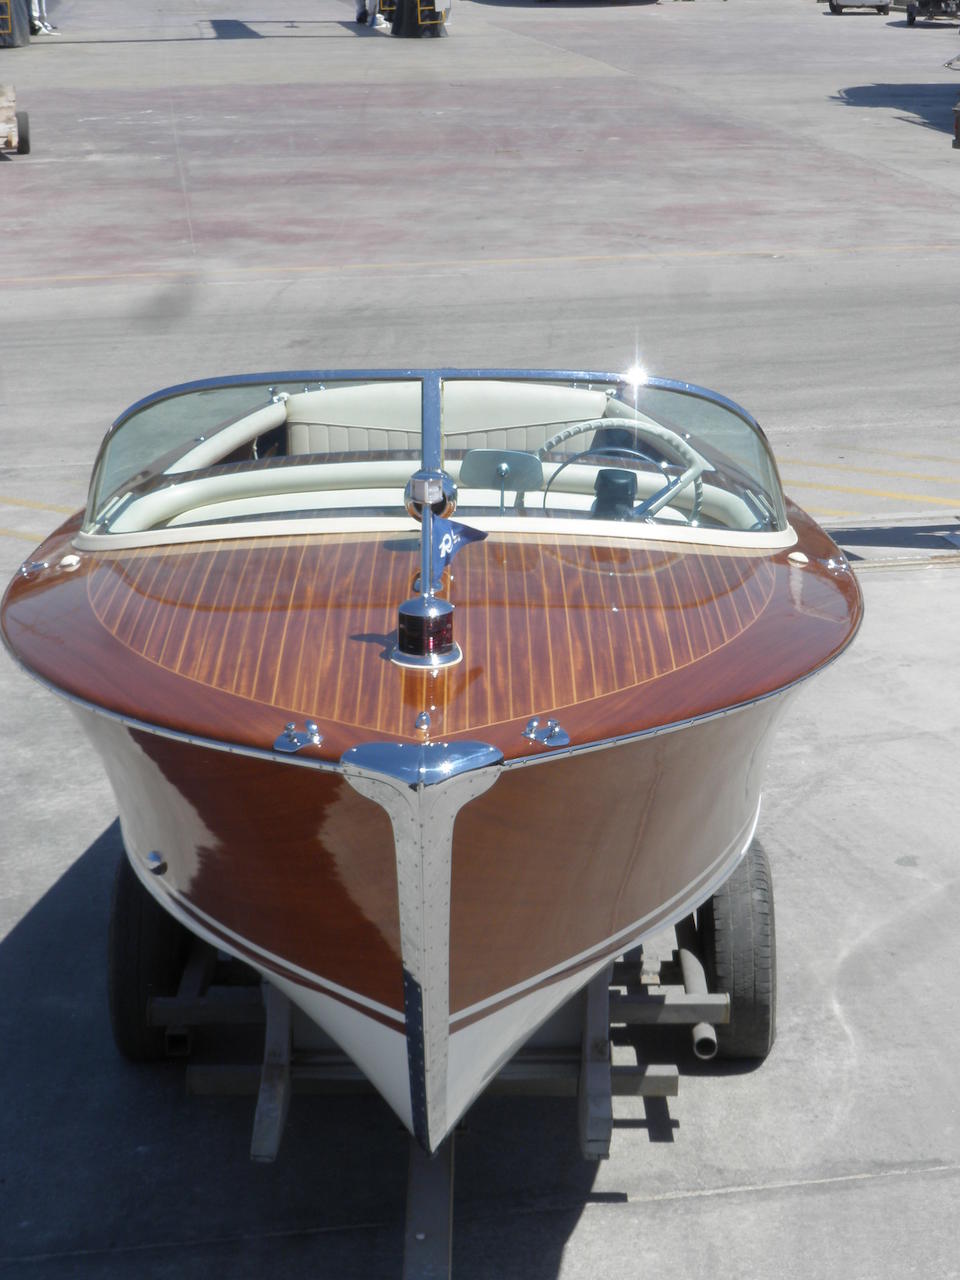 1963 Riva Florida sports boat "Swift",